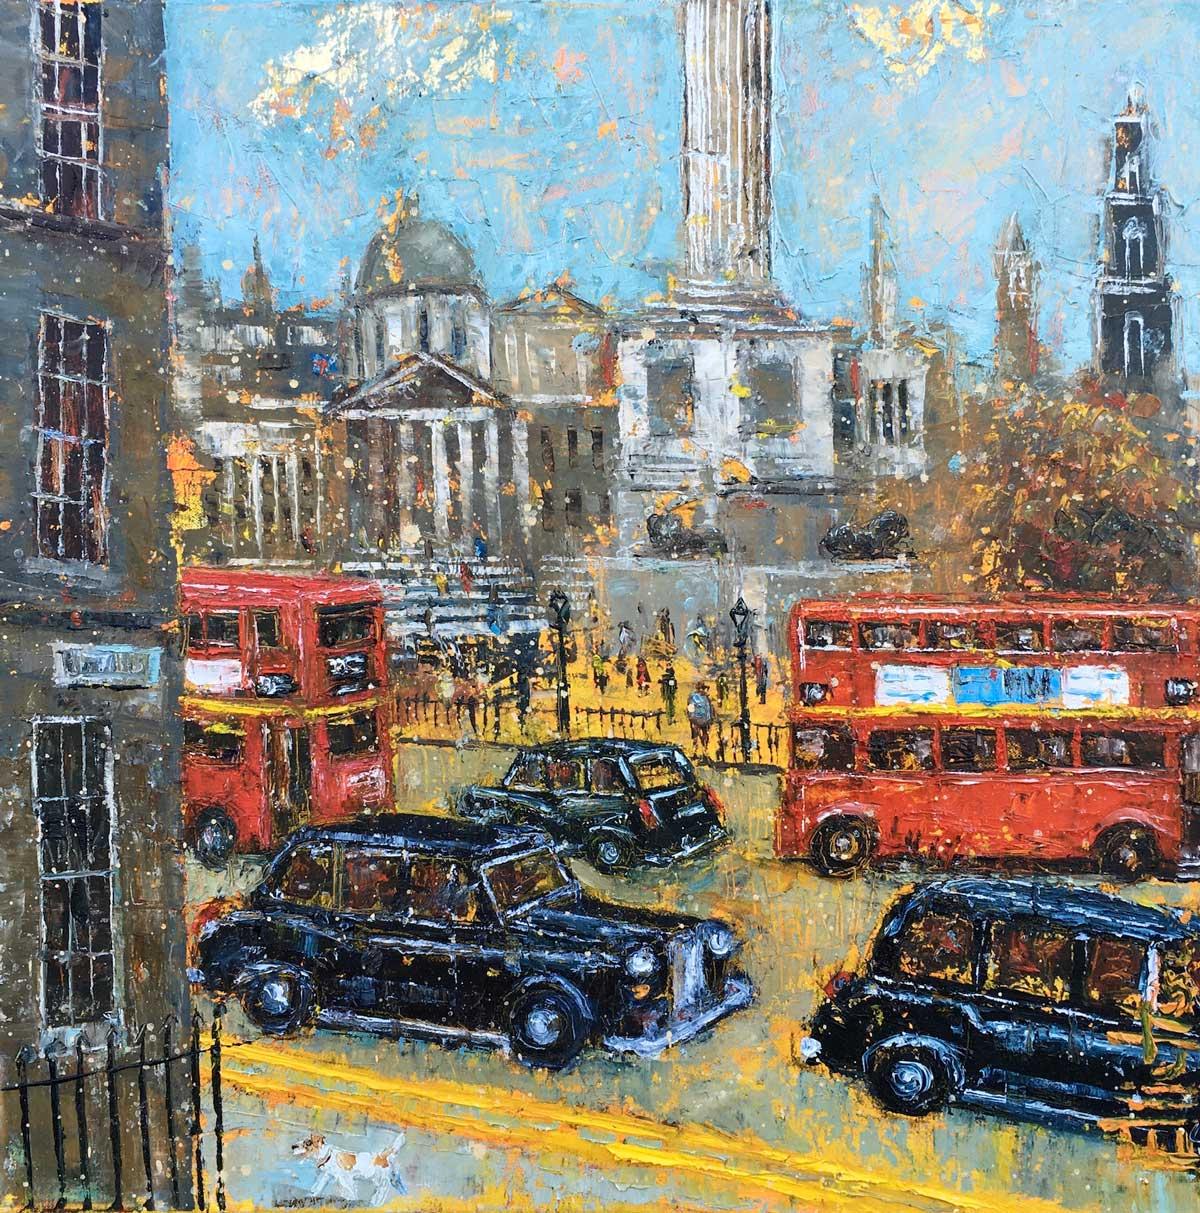 Trafalgar Square - contemporary landscape colourful mixed media painting